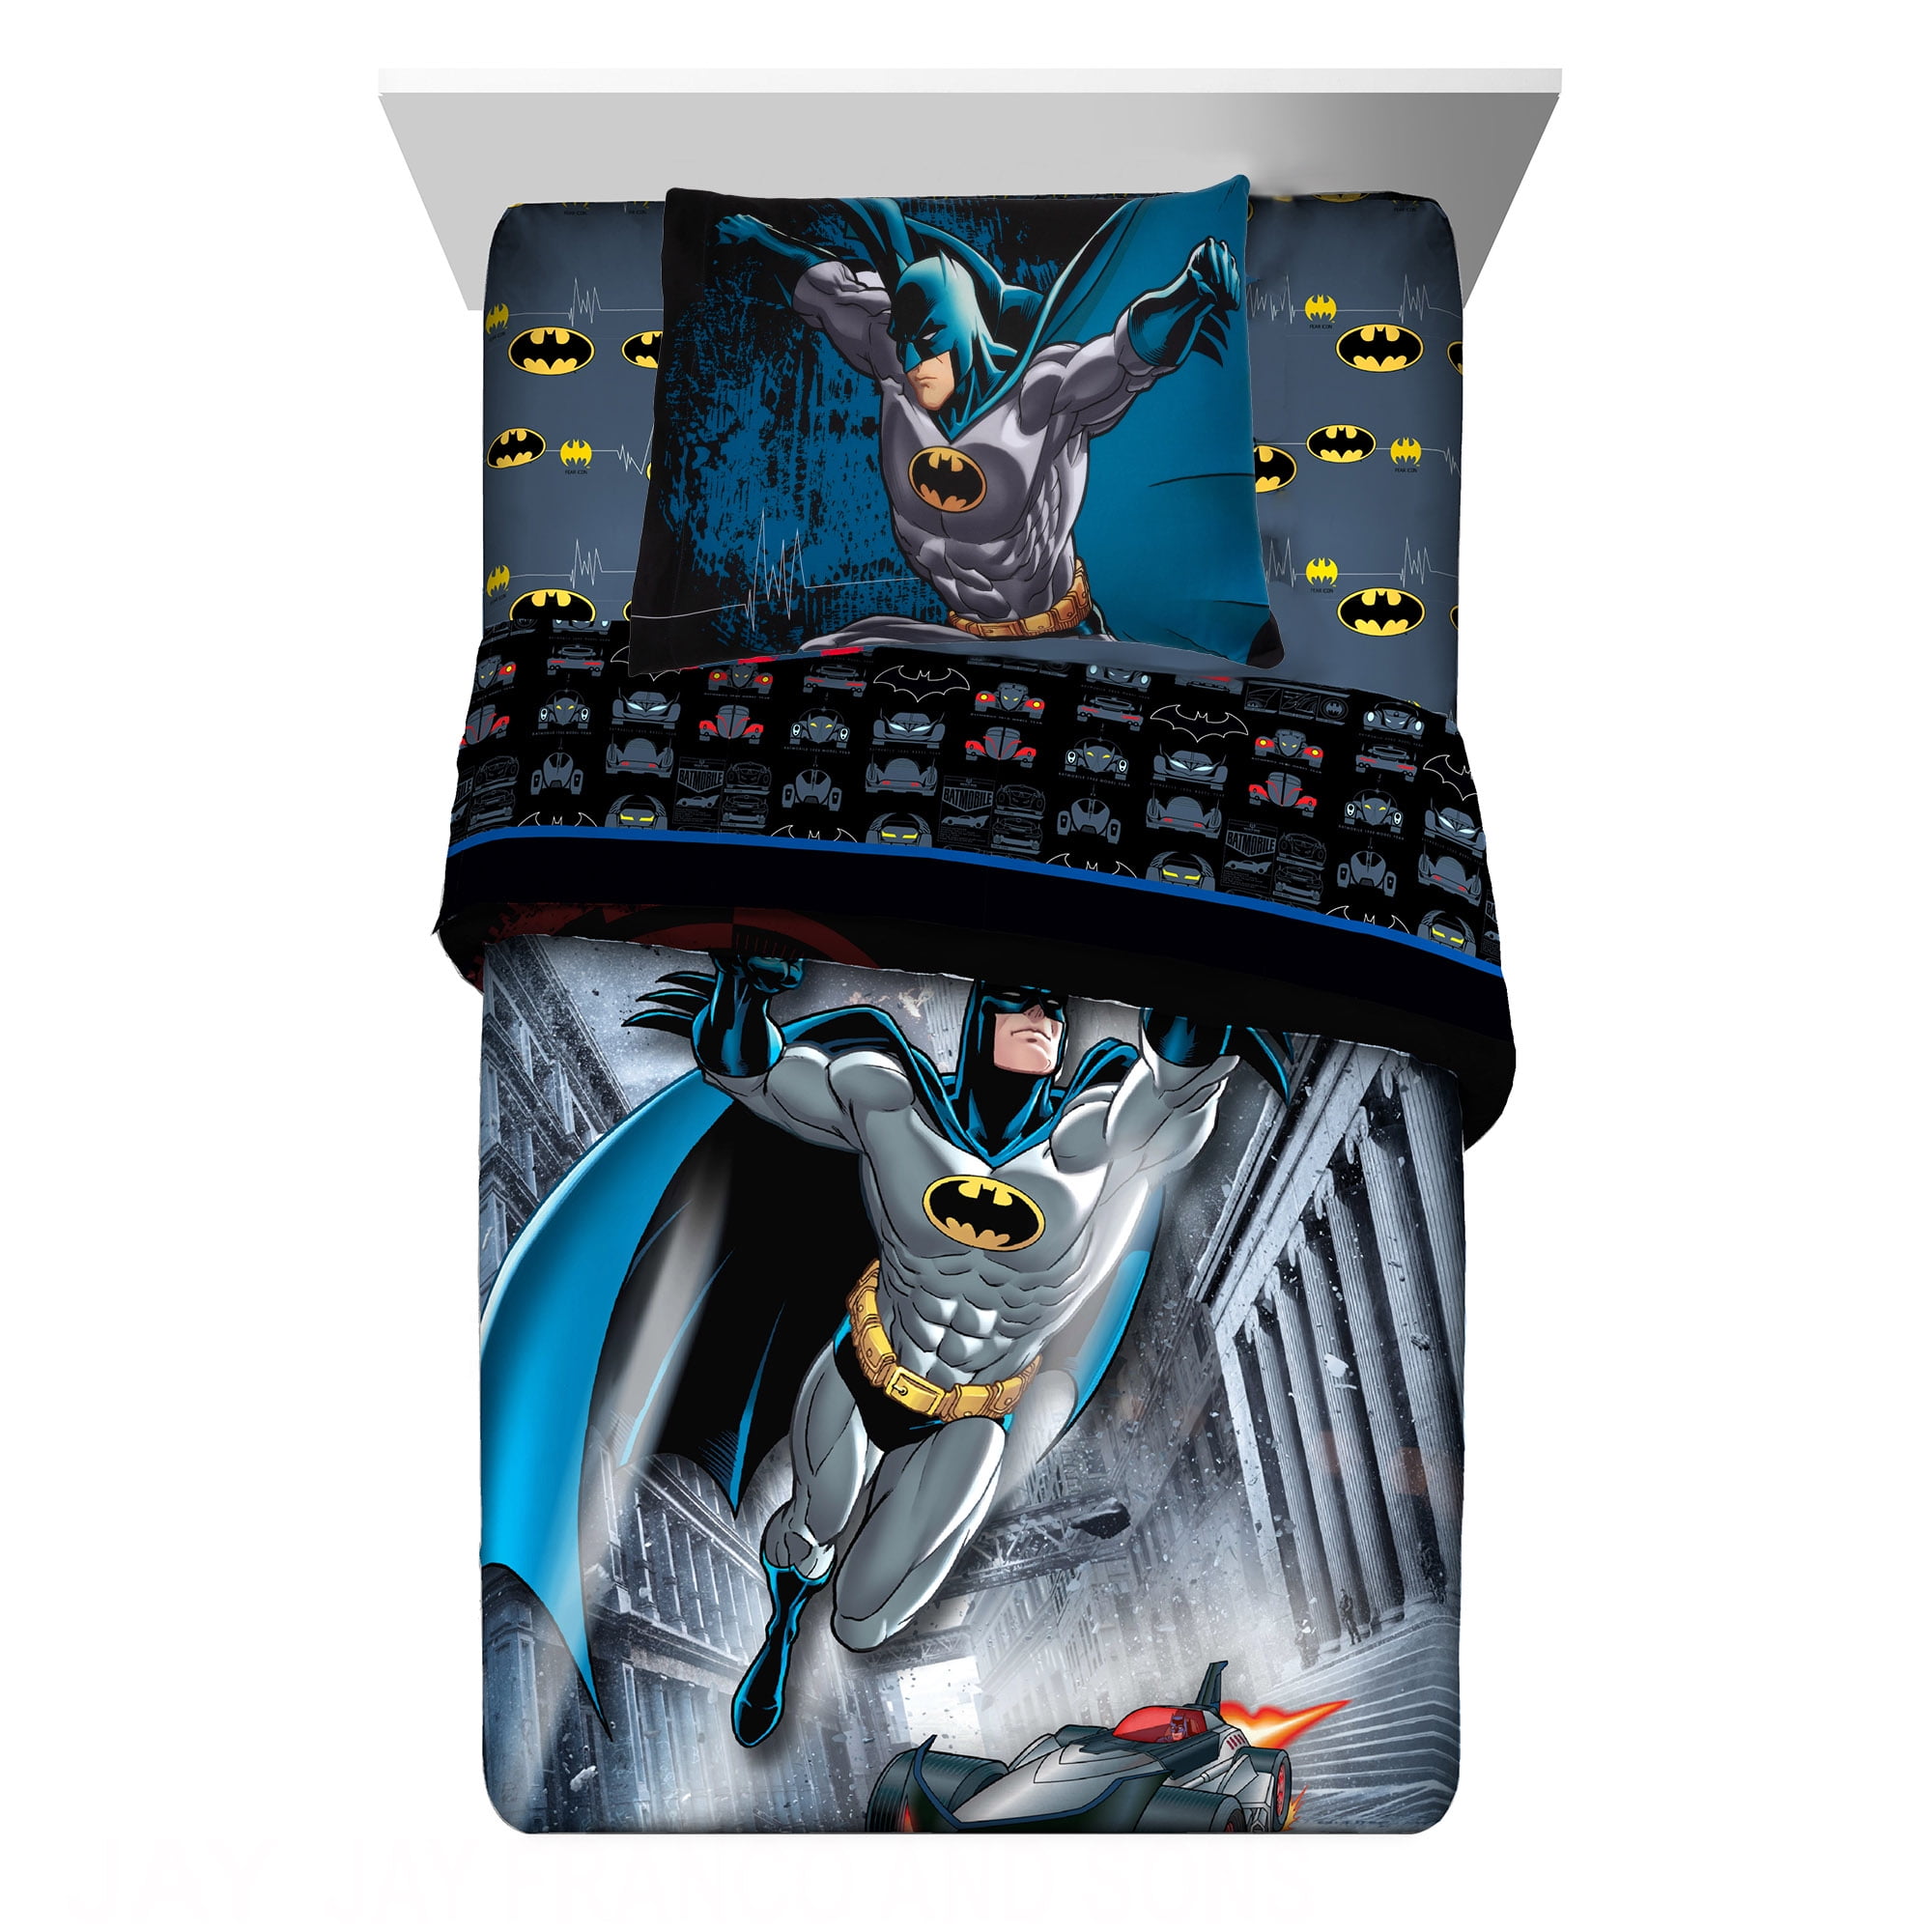 FREE SHIPPING!! Batman Kid's Bedding Set FULL SIZE 